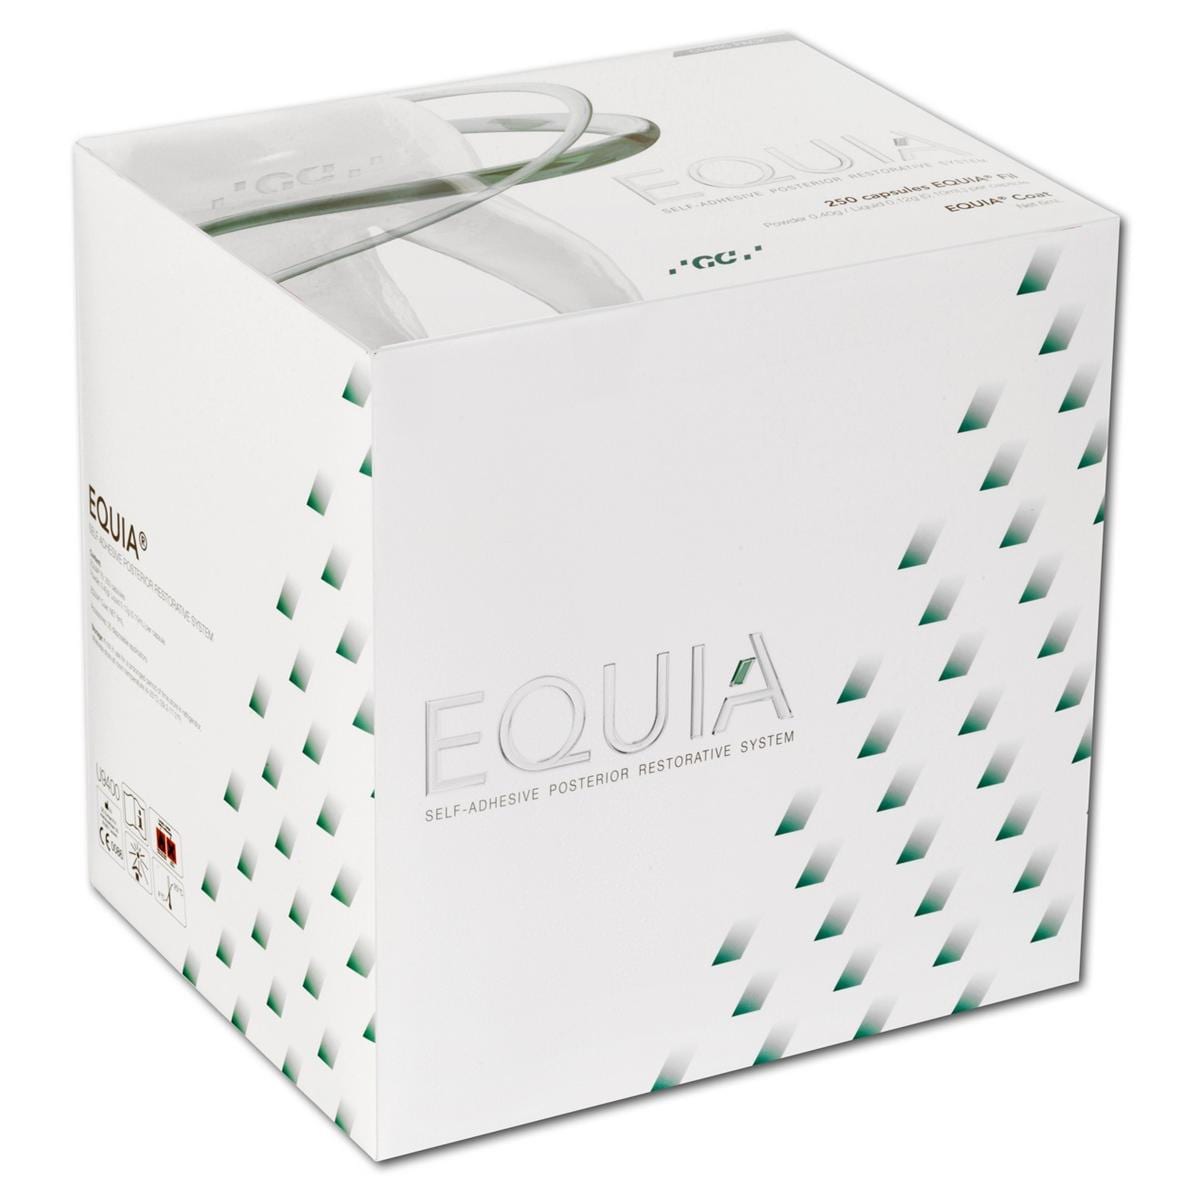 EQUIA Clinic Pack - A2